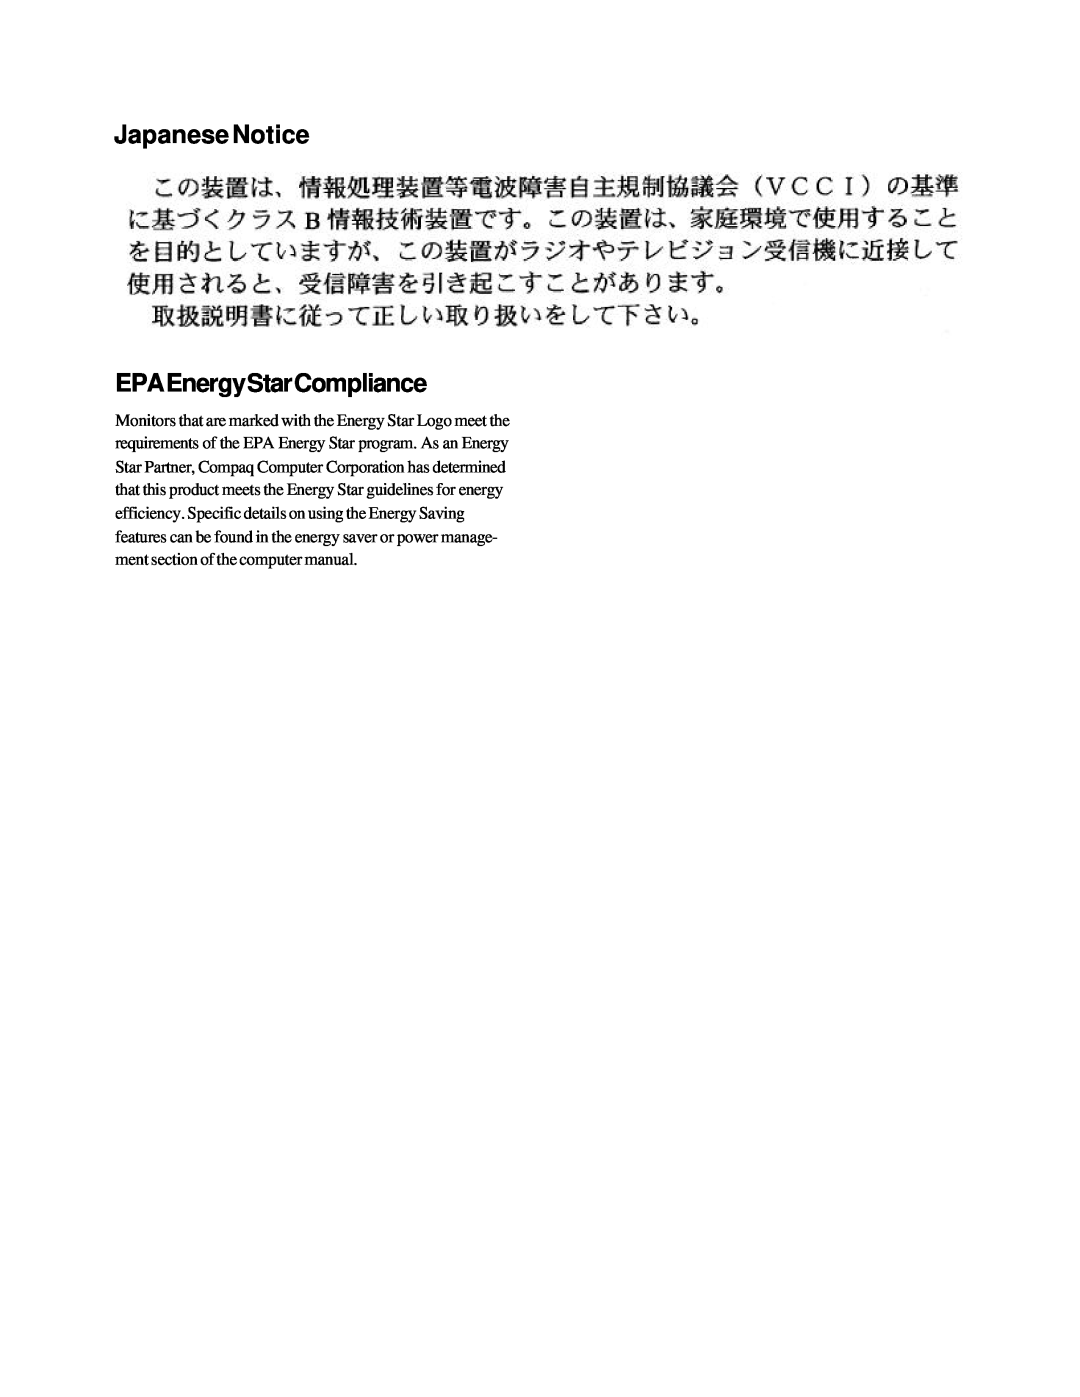 Compaq 1220 manual JapaneseNotice EPAEnergyStarCompliance 